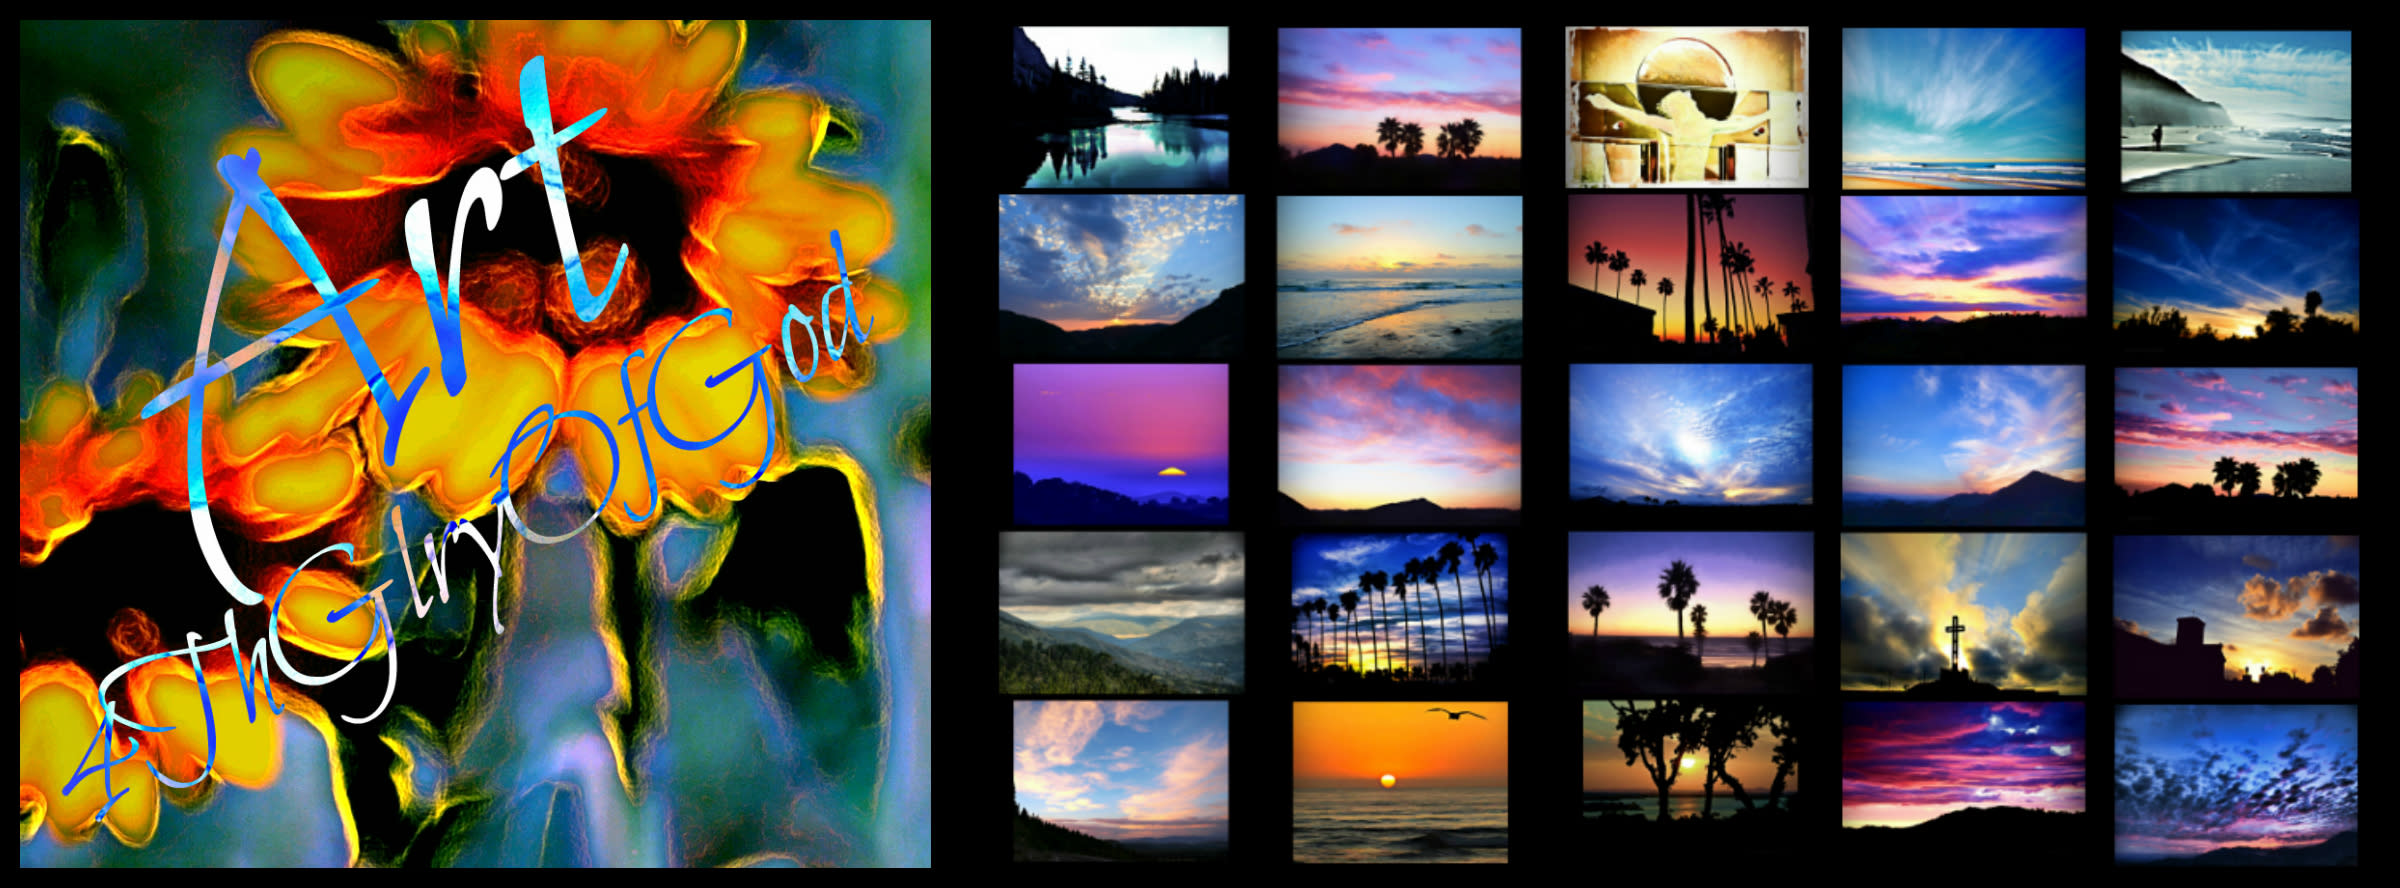 
        <div class='title'>
          Favorite-Digital-Paintings-Collage-2400-gn1ixd
        </div>
       